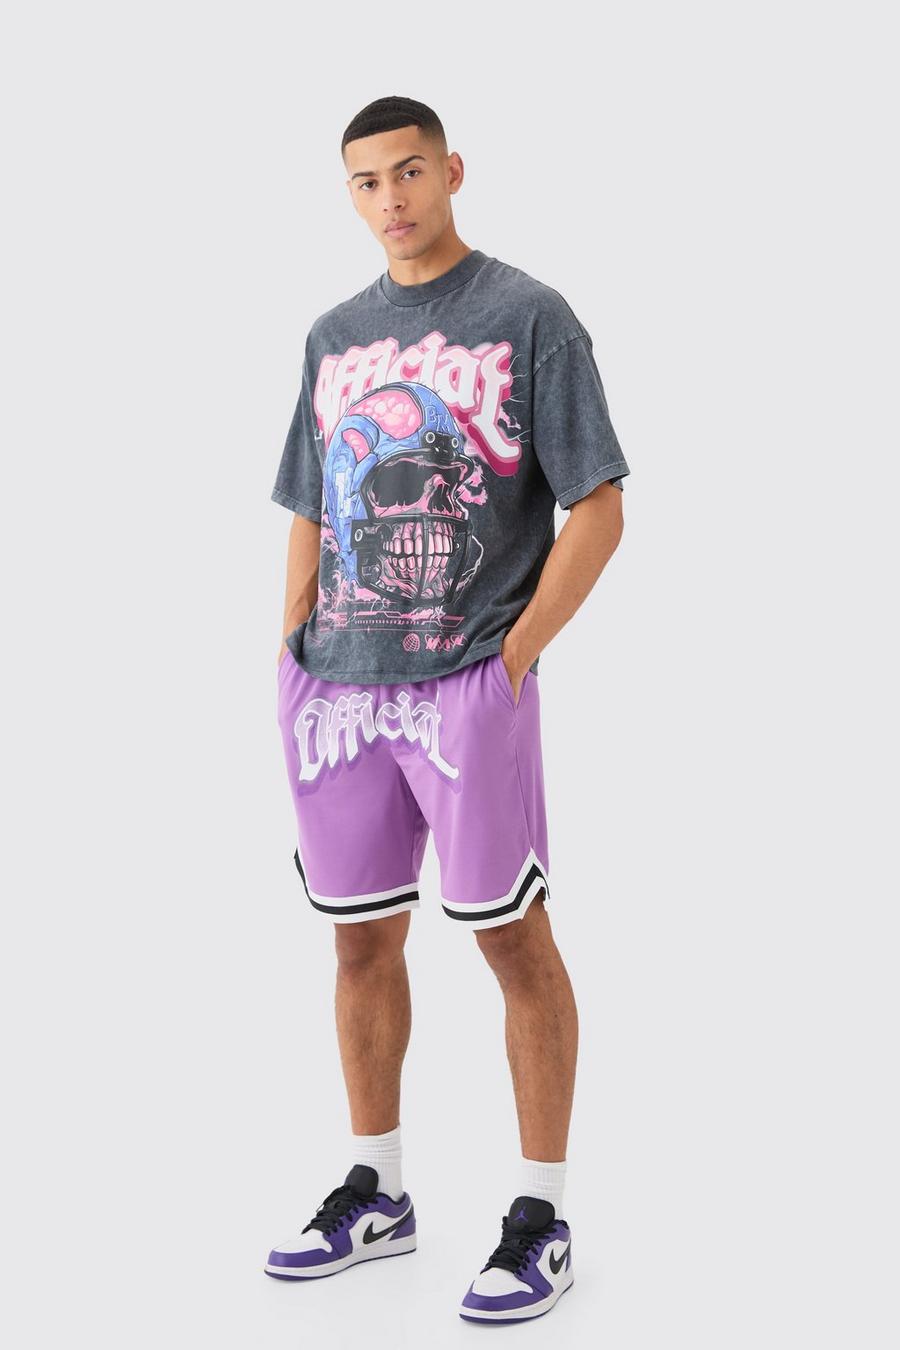 Lockeree Official Mesh Basketball-Shorts, Purple image number 1